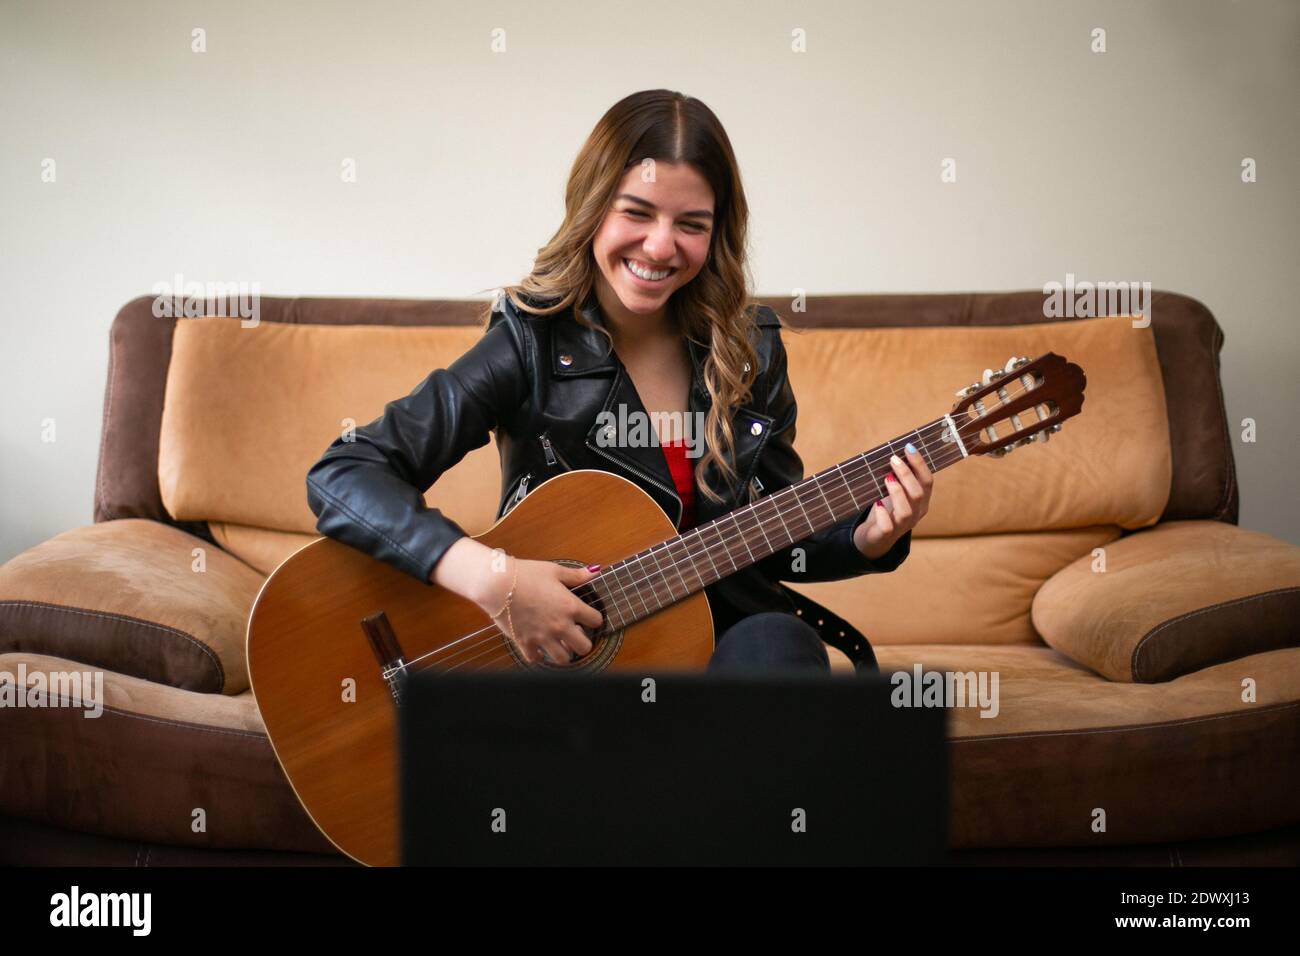 Girl Plays Guitar In Living Room